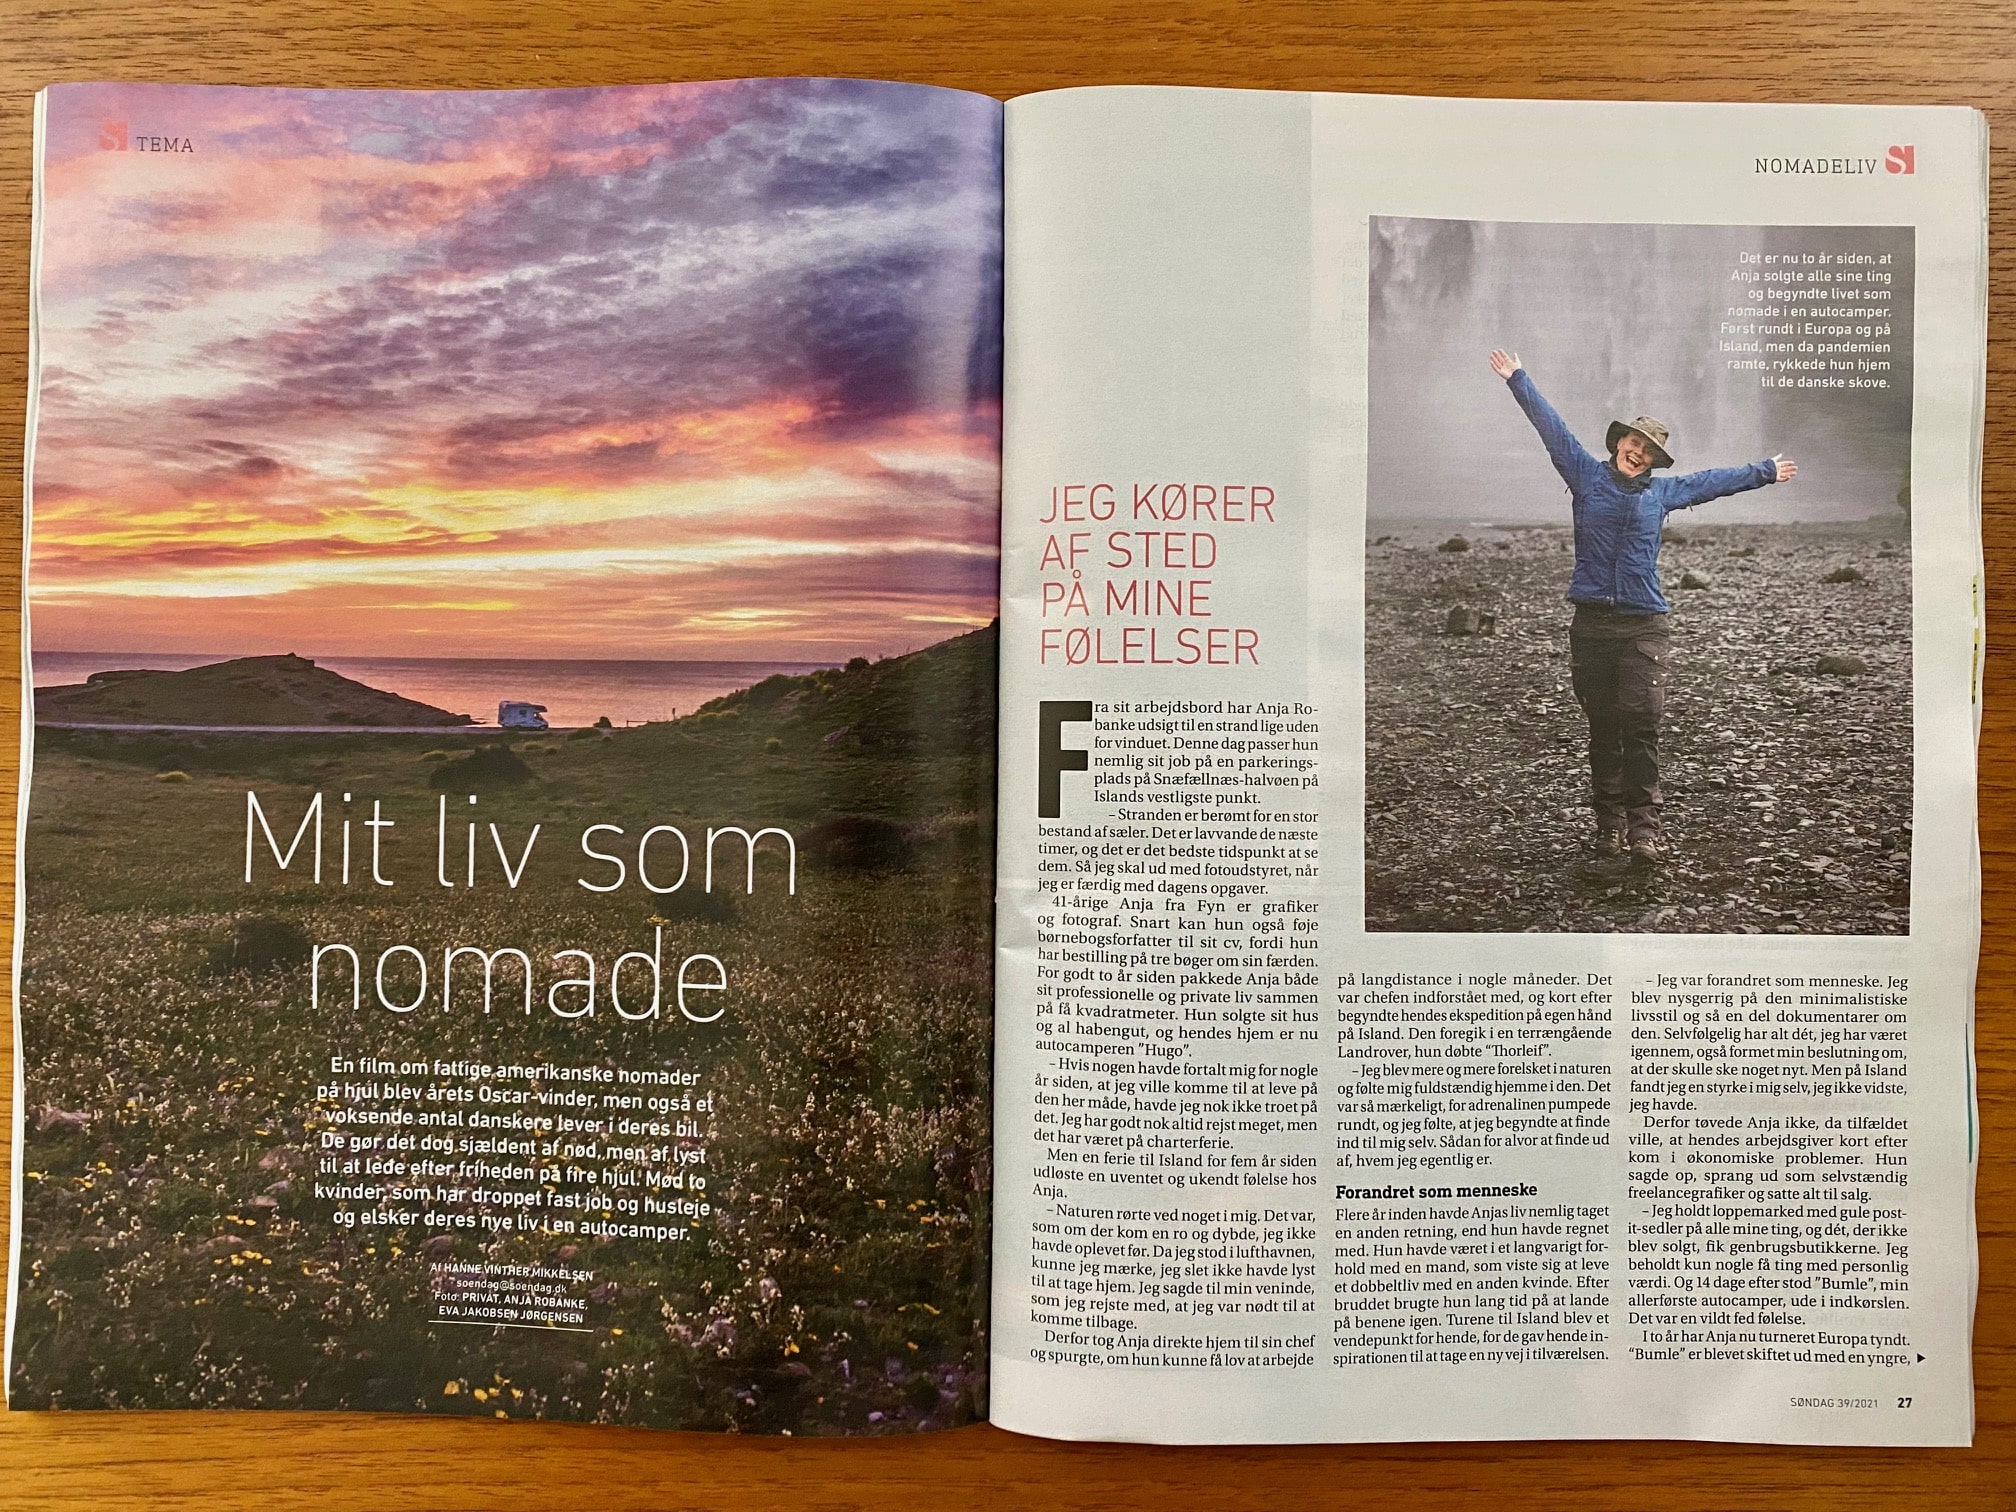 Article in the weekly magazine SØNDAG - Anja Robanke